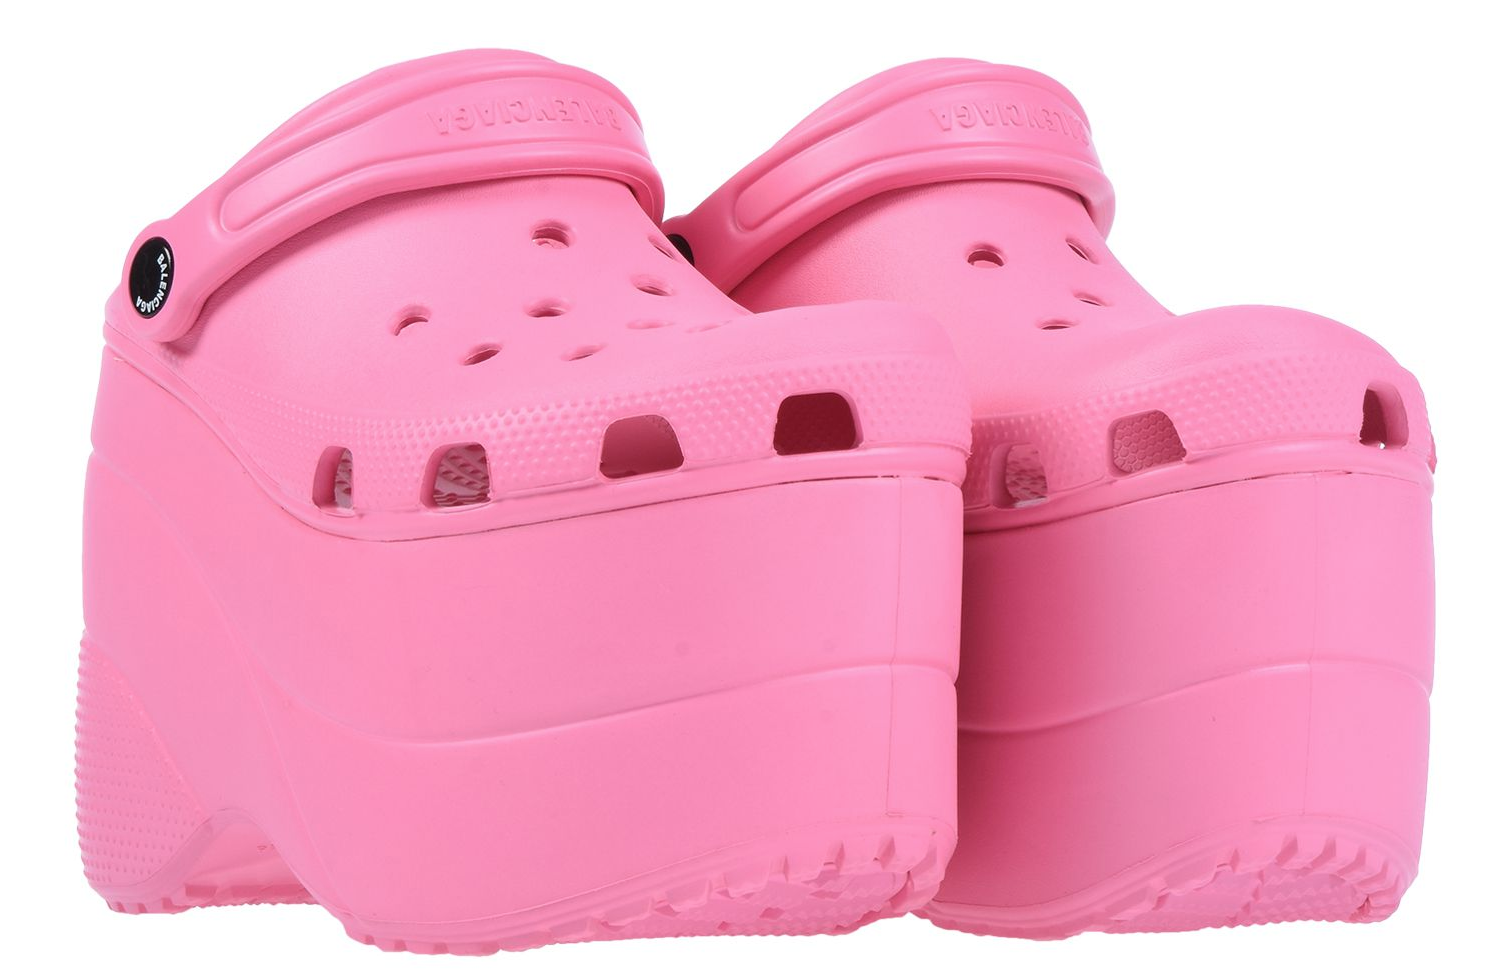 platform crocs shoes